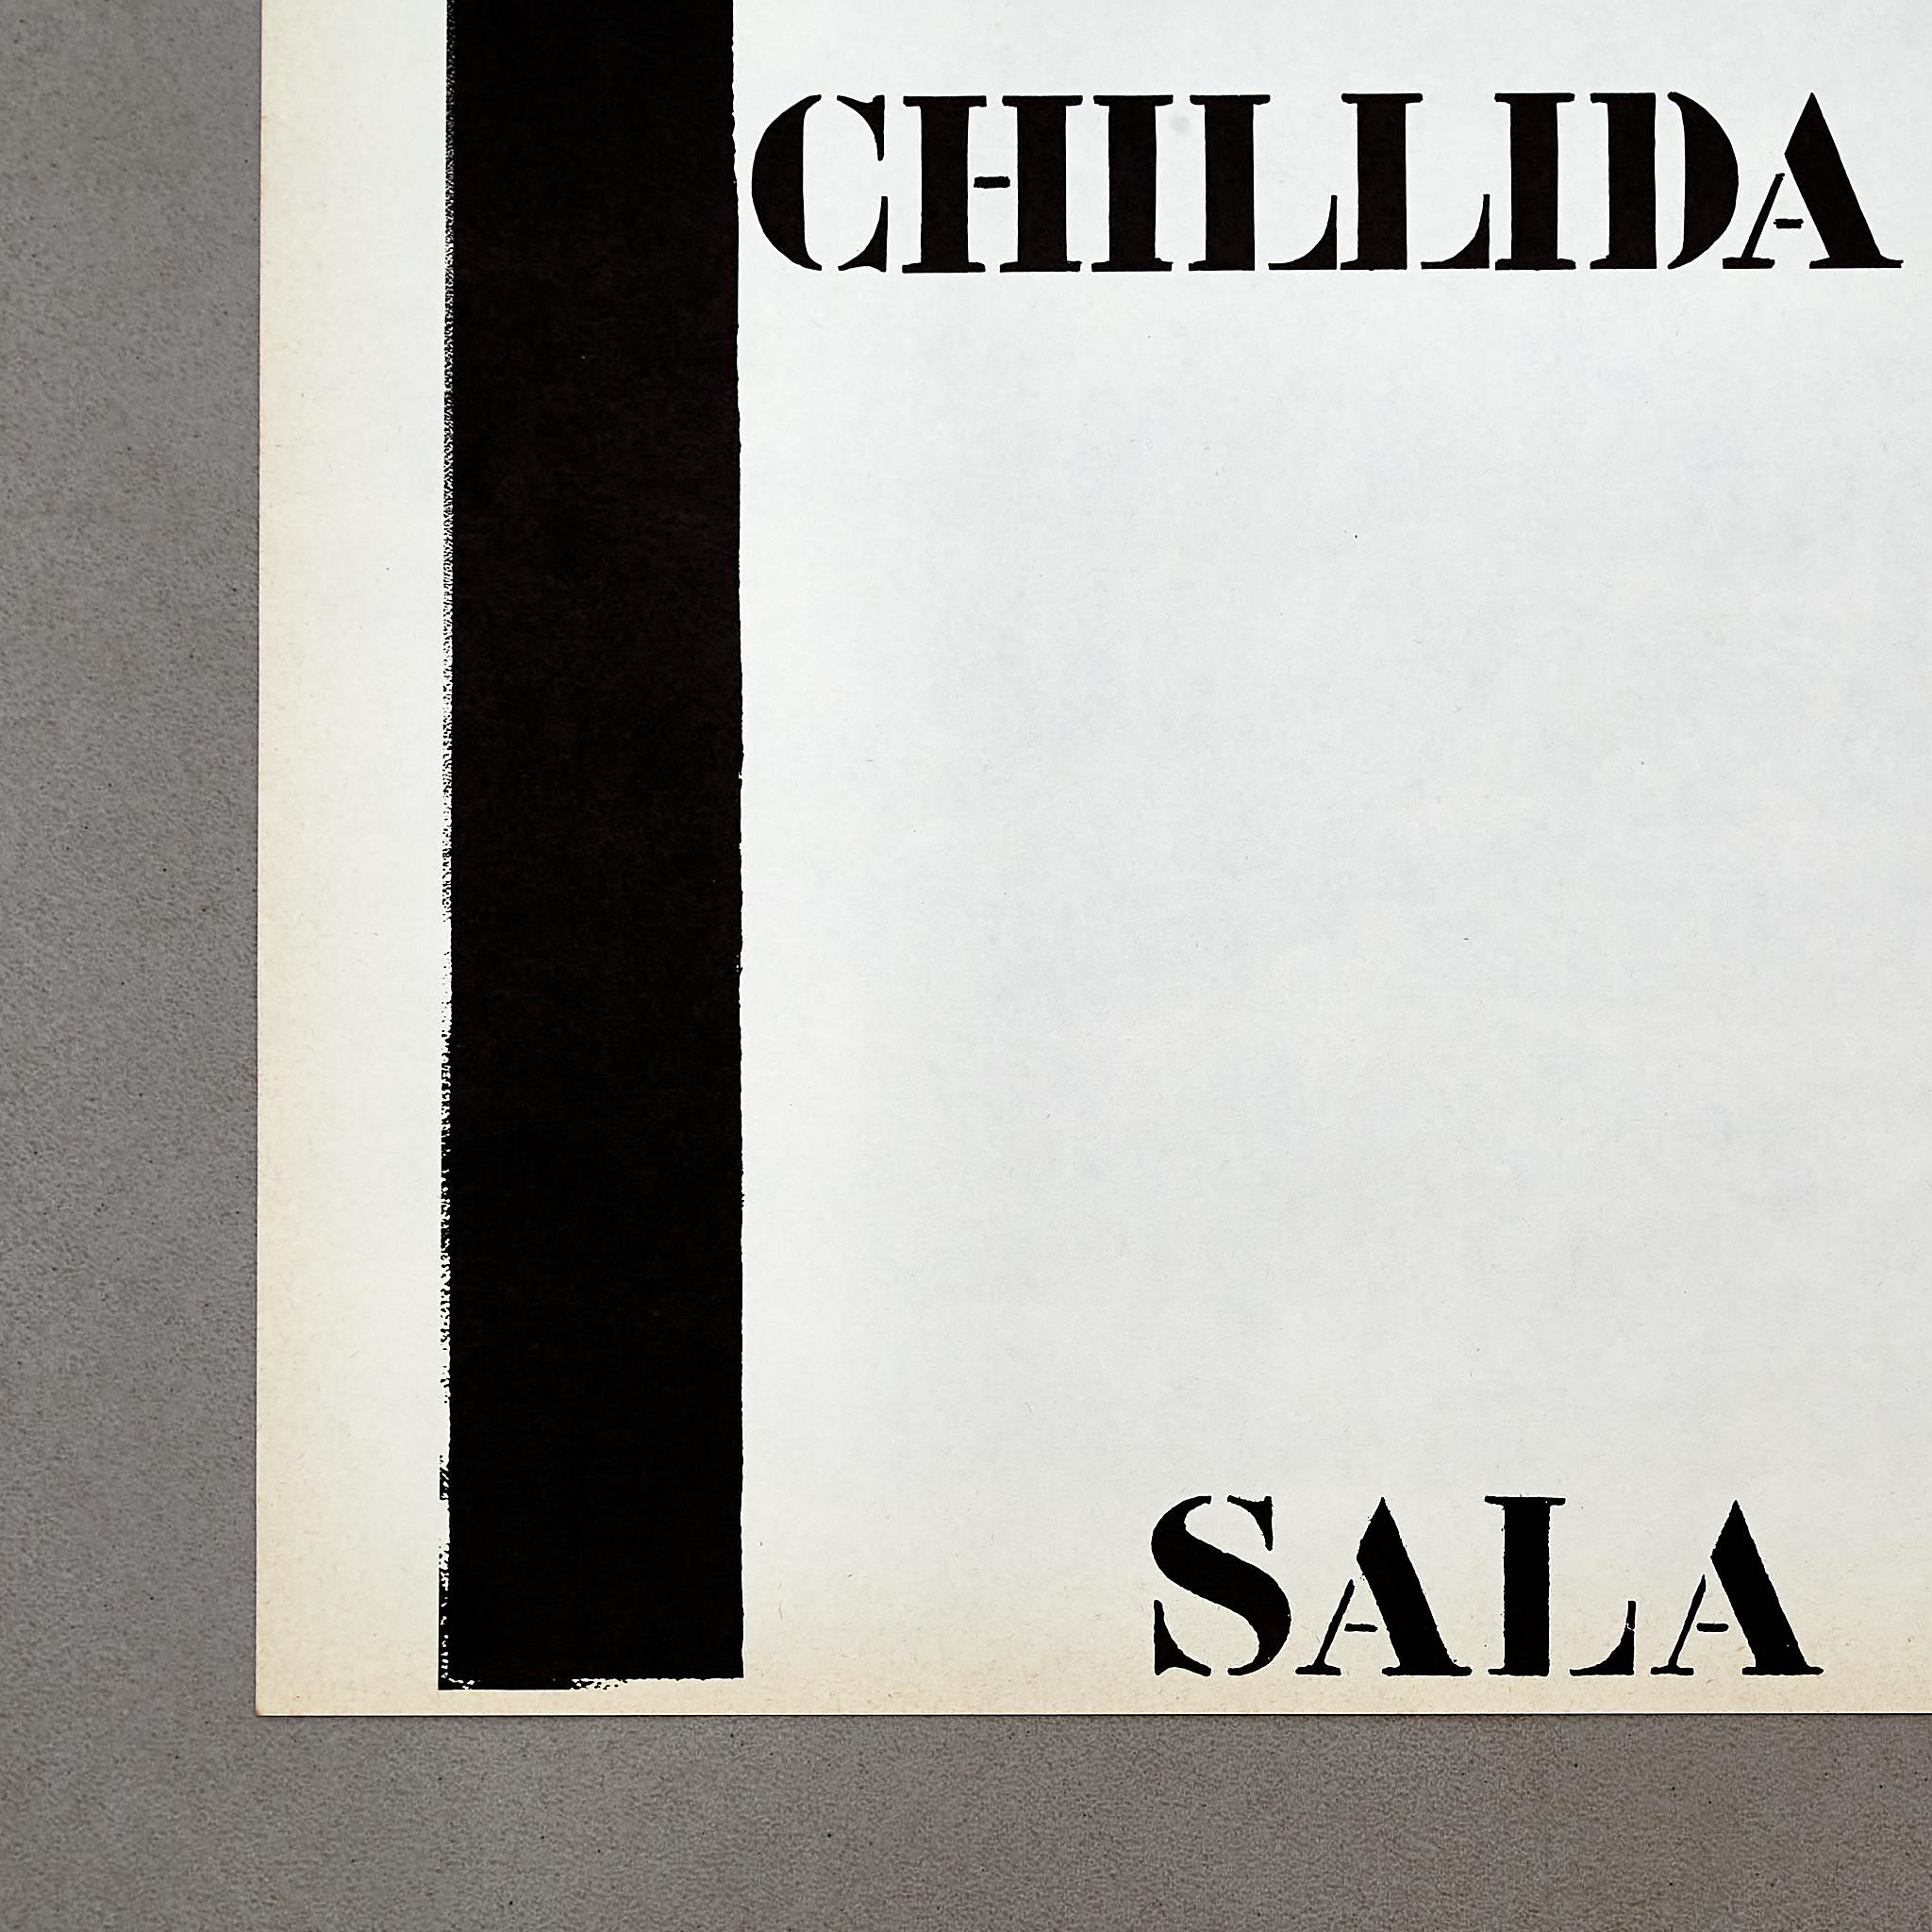 Paper Timeless Legacy: Eduardo Chillida's Original Historic Poster for Sala Gaspar For Sale